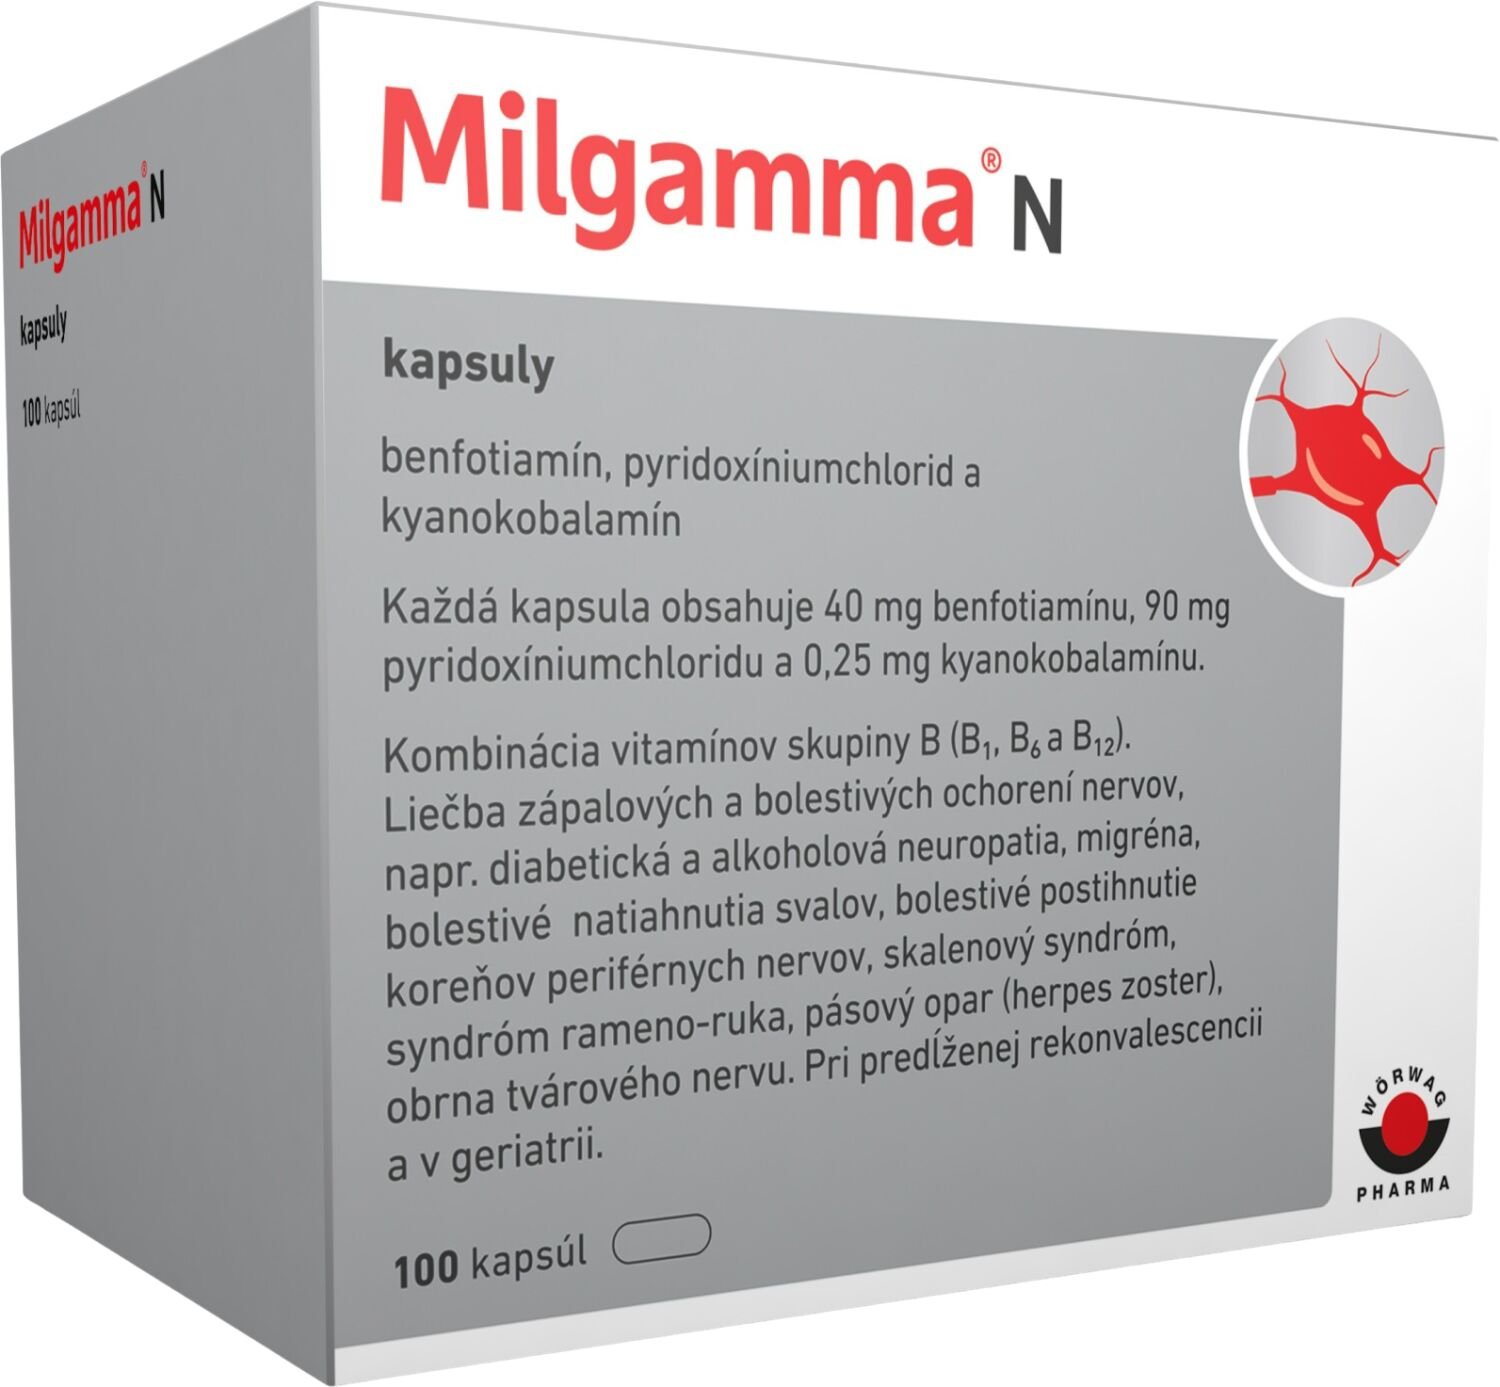 Milgamma N trojkombinacia vitaminov 100 kapsúl